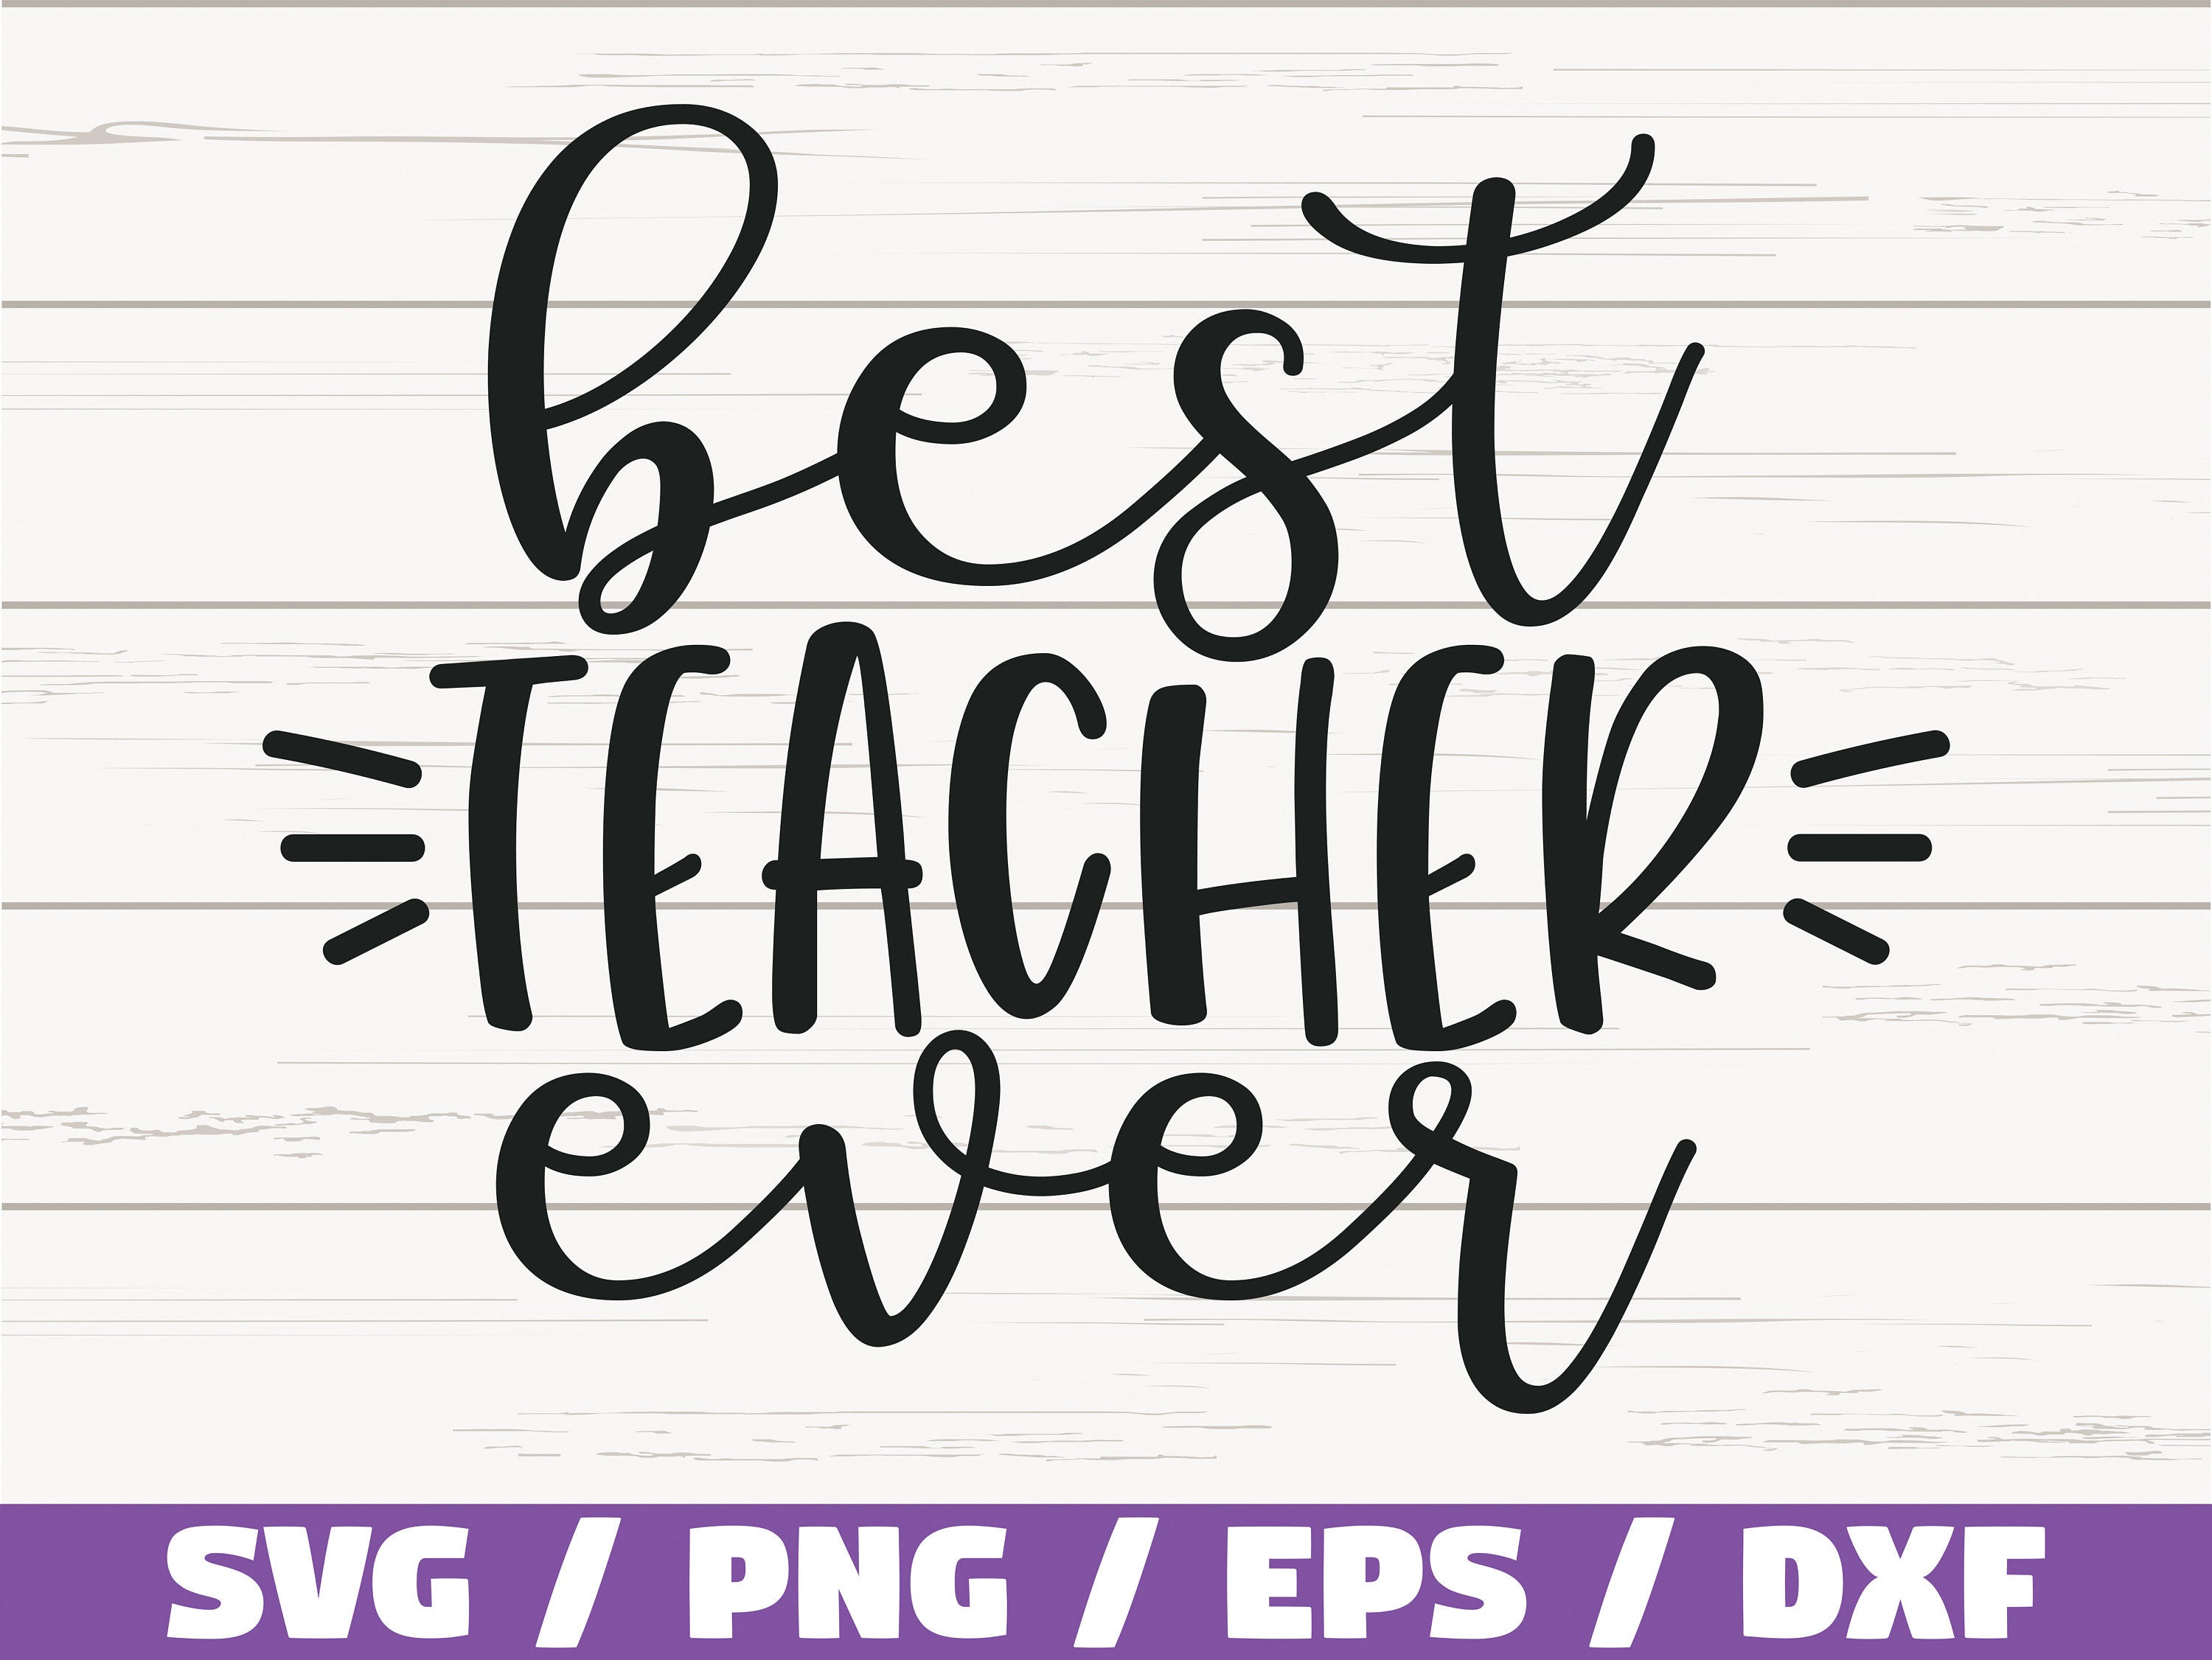 Best Teacher Ever SVG / Cut File / Cricut / Commercial use / Silhouette / DXF file / Teacher Shirt / School SVG / Teacher Gift